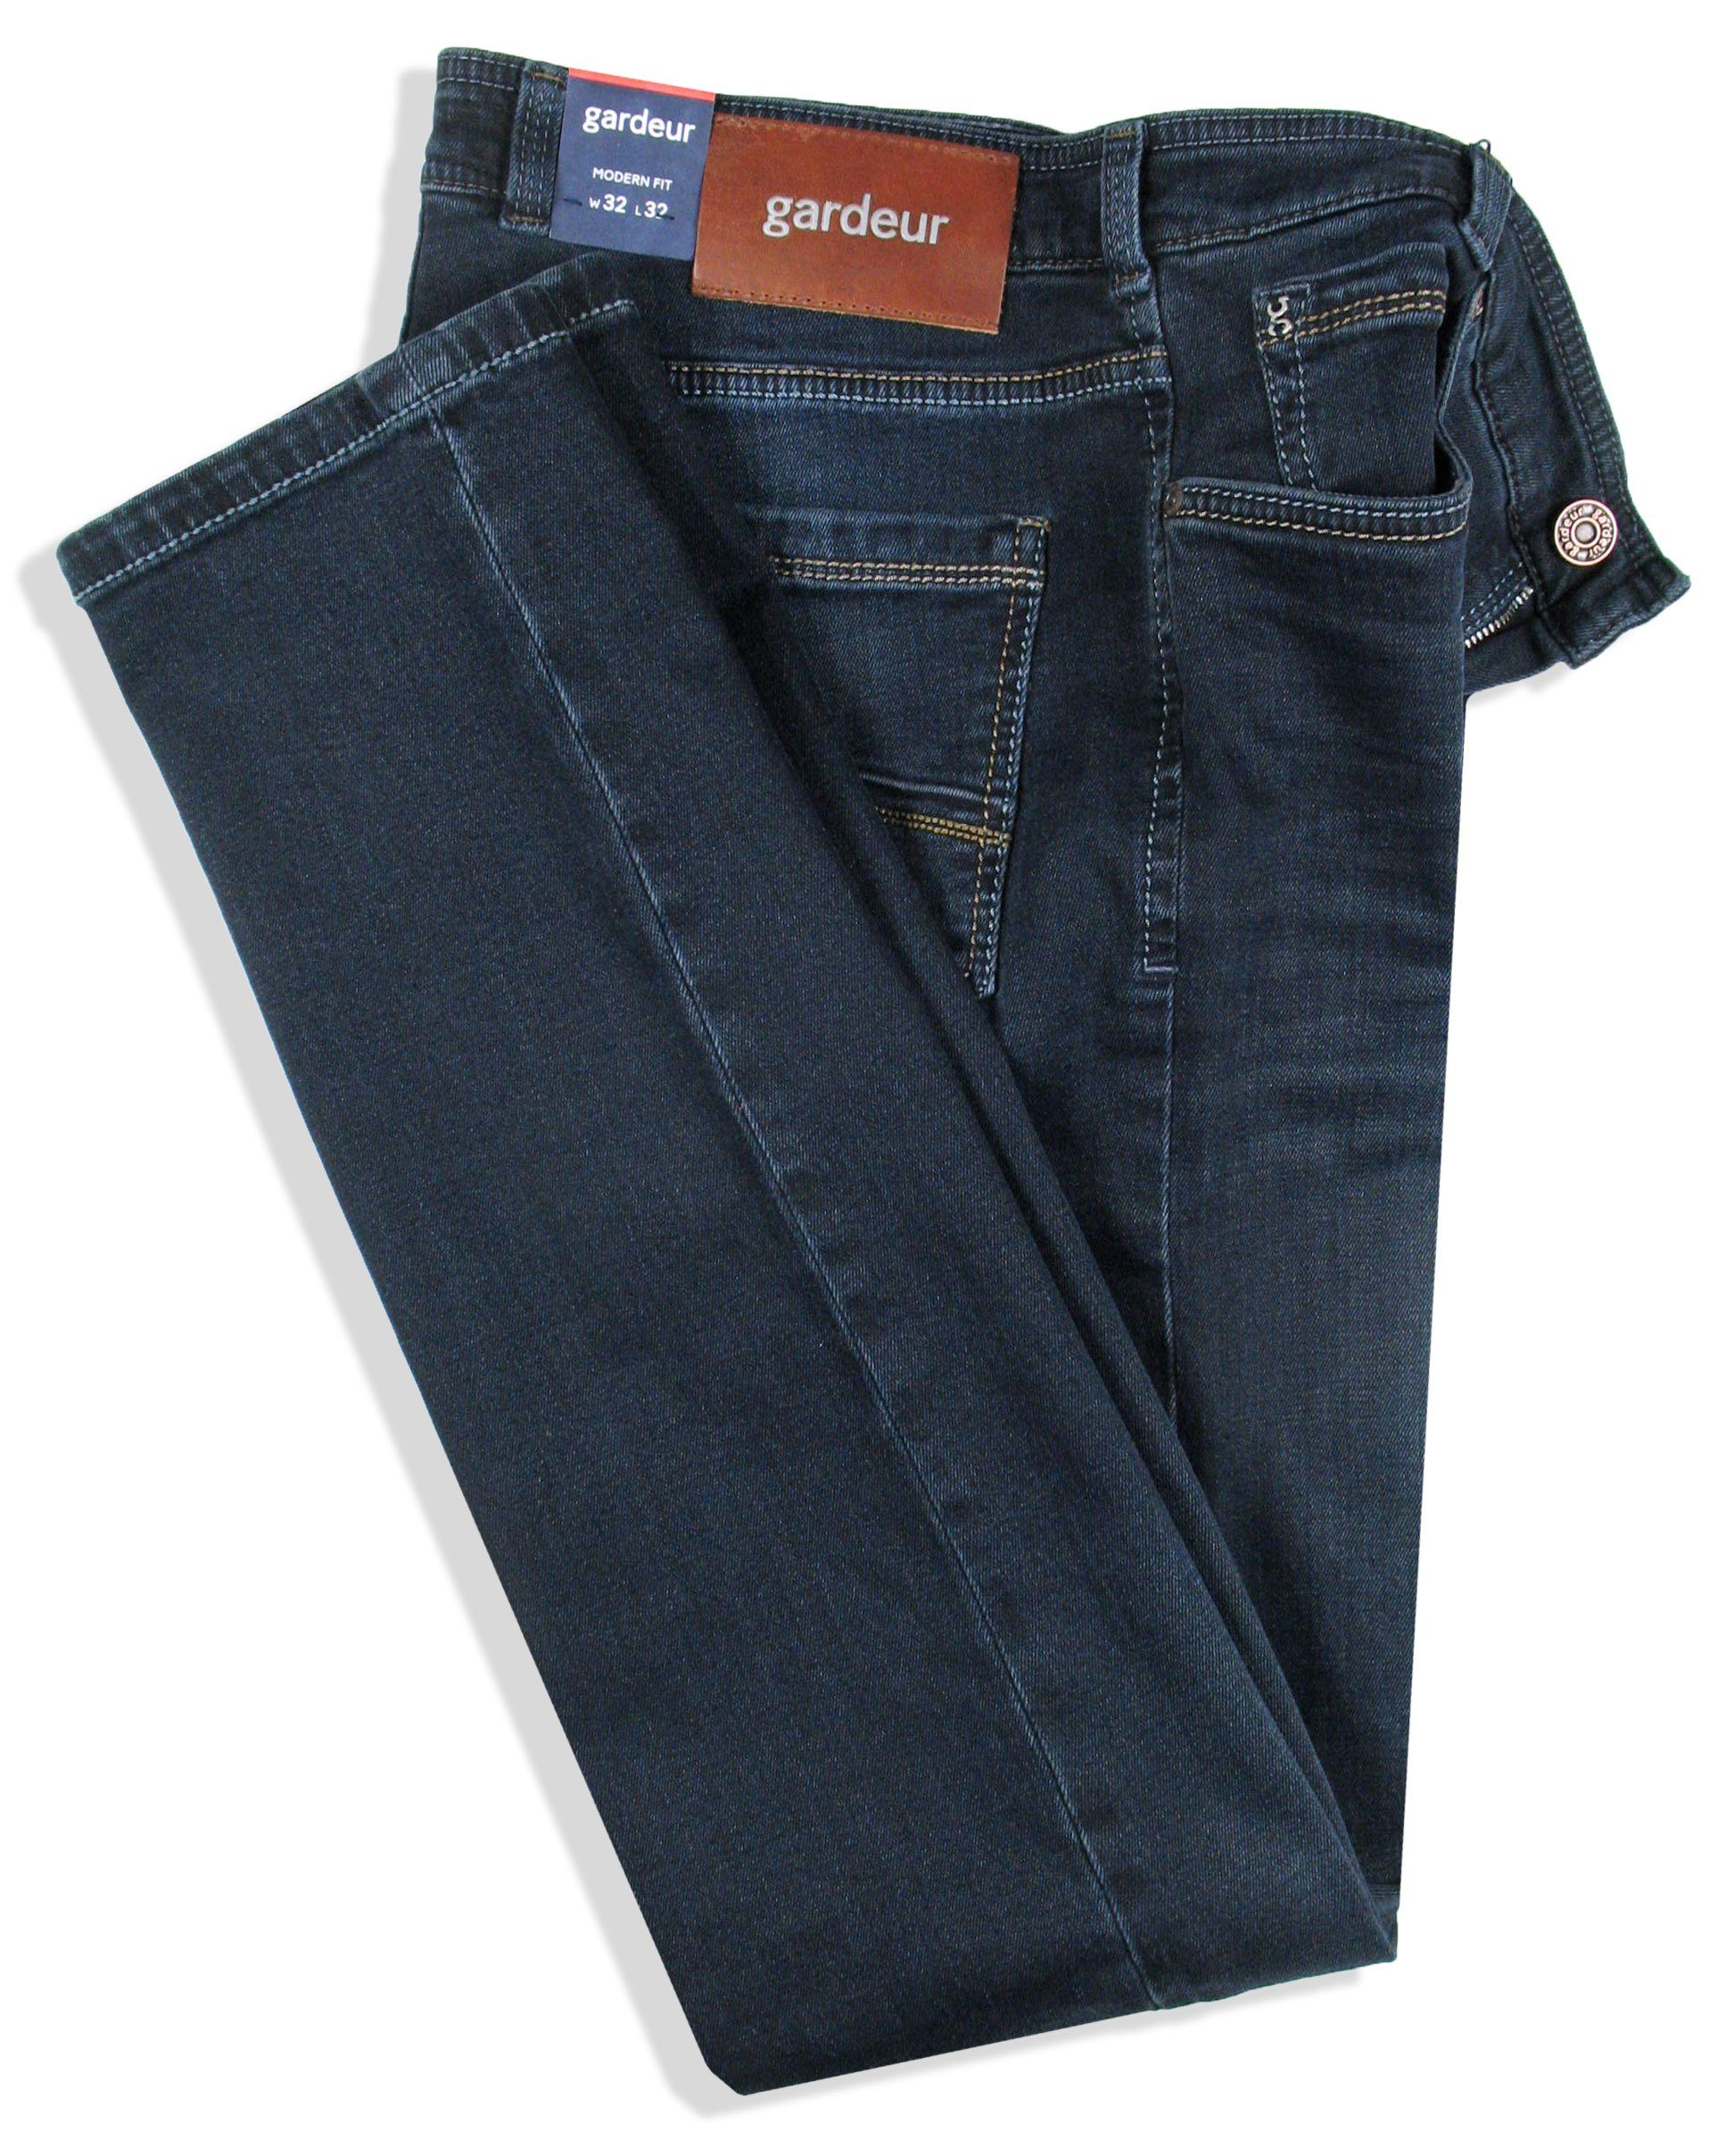 blau Denim Atelier Superflex Batu-2 GARDEUR 5-Pocket-Jeans